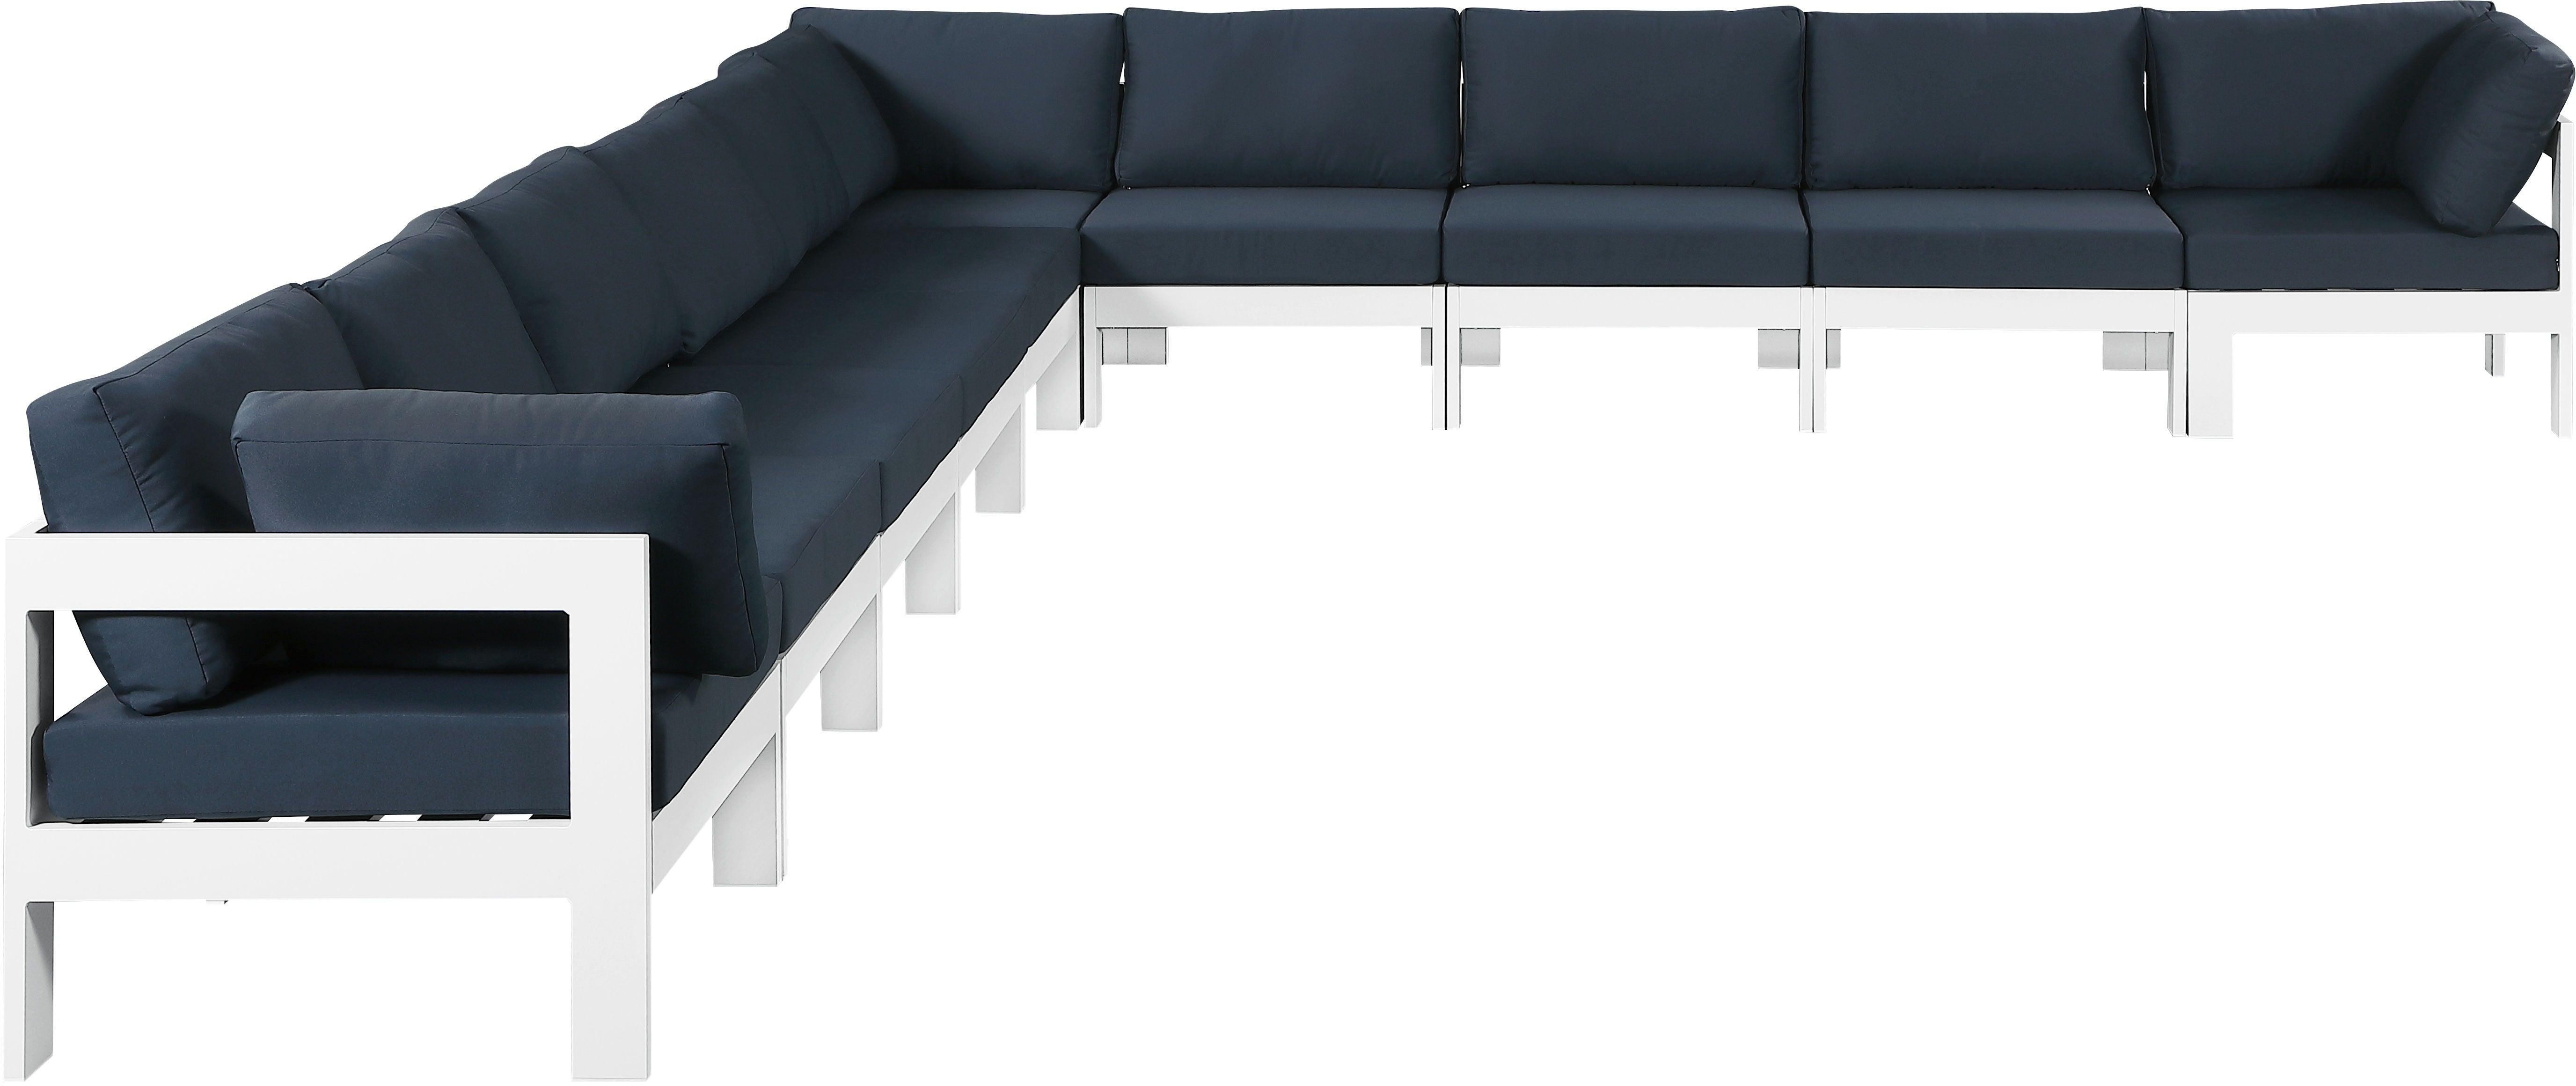 Meridian Furniture - Nizuc - Outdoor Patio Modular Sectional 10 Piece - Navy - Fabric - 5th Avenue Furniture